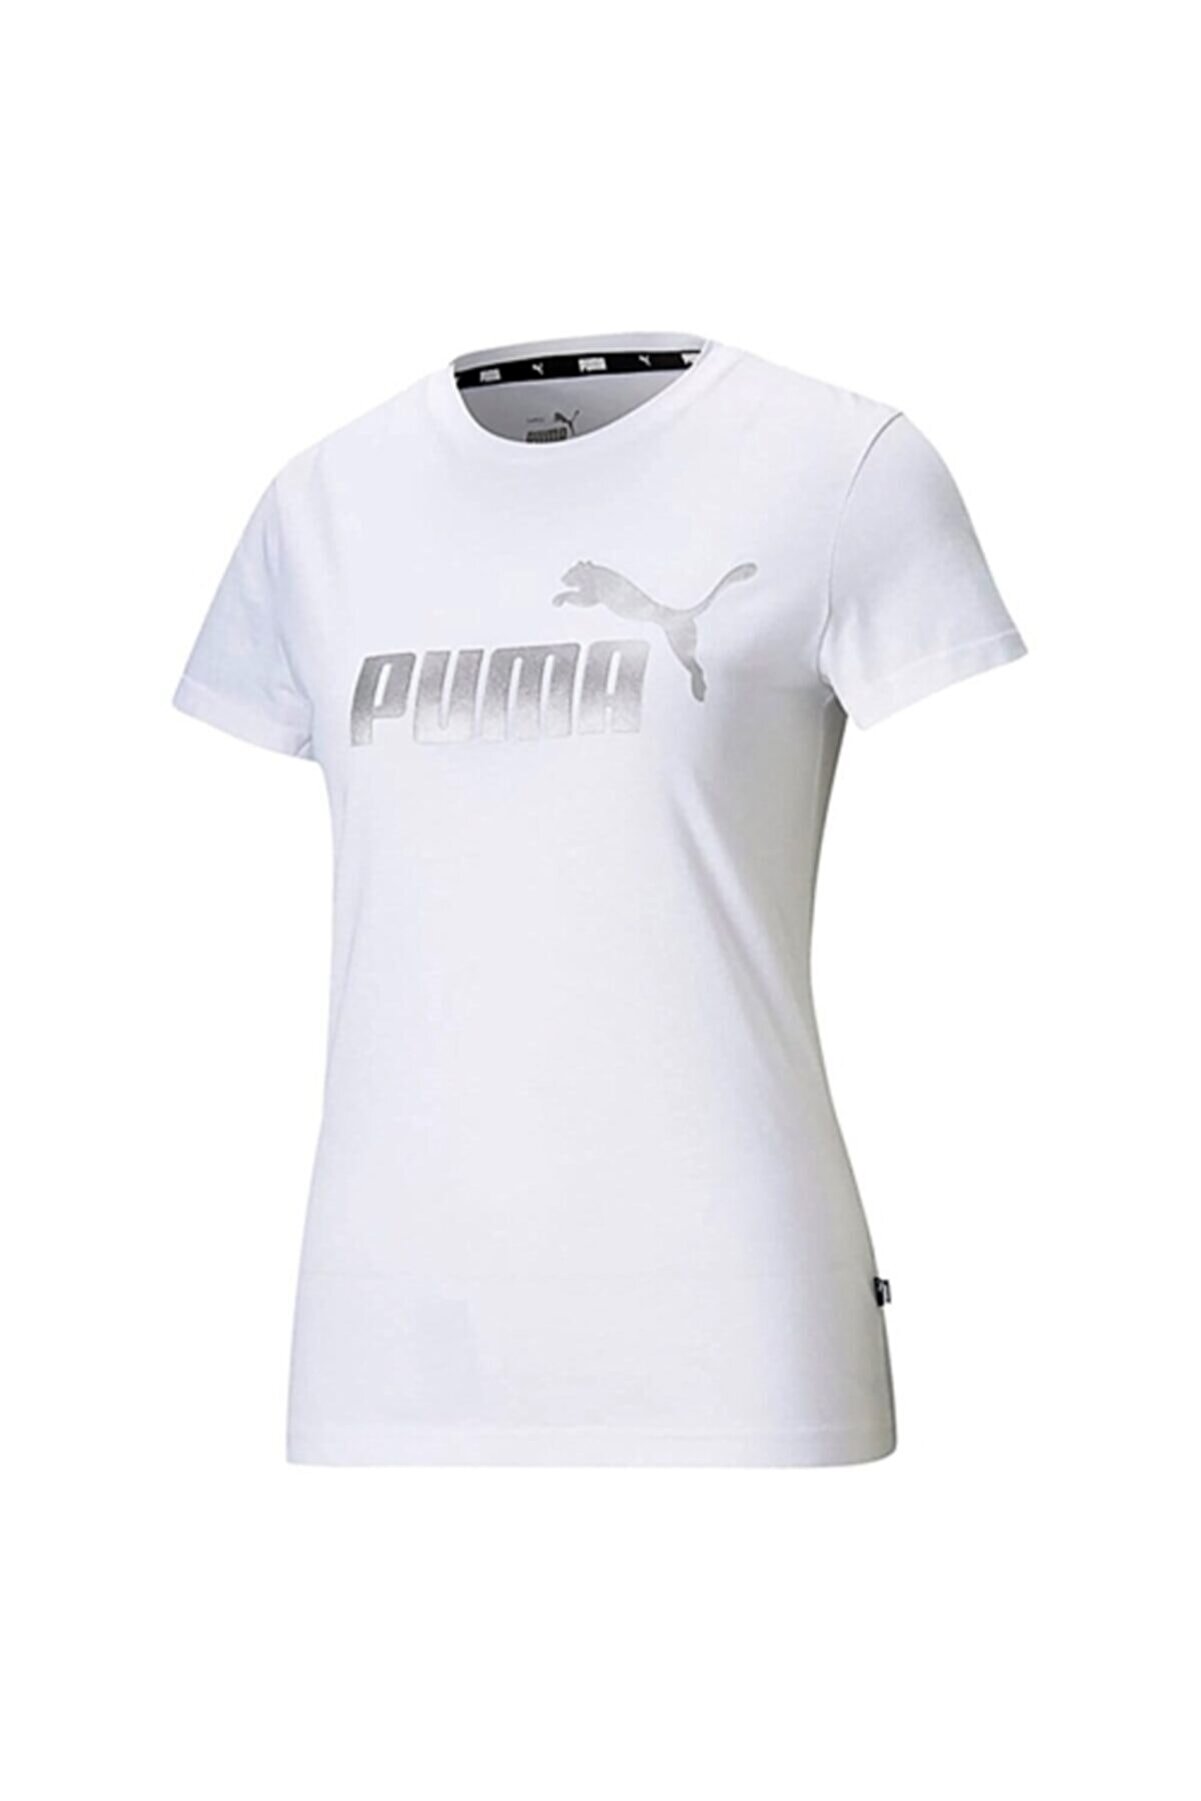 Puma Ess Metallic Logo Tee Kadın T-shirt Whıte-sılver 586890-02